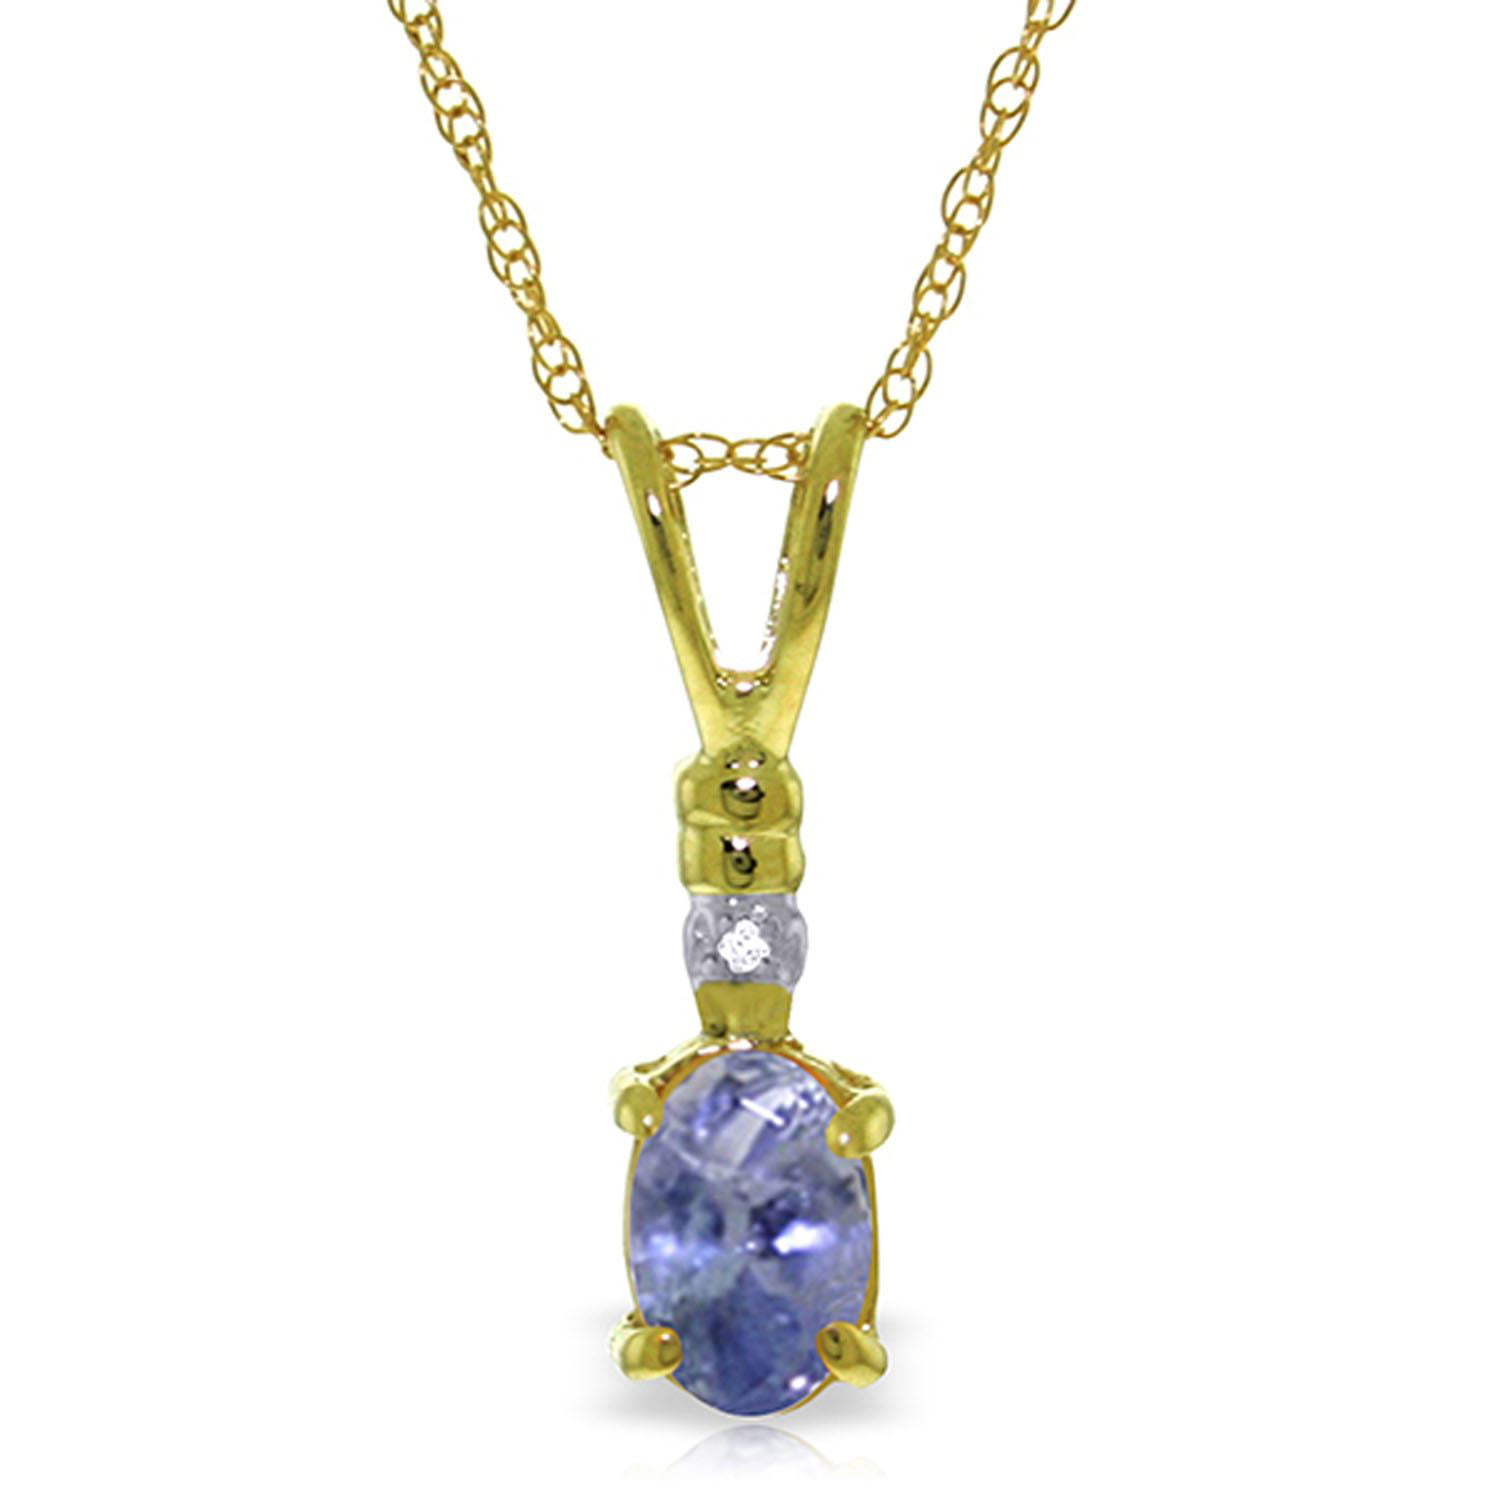 ALARRI 0.46 Carat 14K Solid Gold Daybreak Tanzanite Diamond Necklace with 20 Inch Chain Length